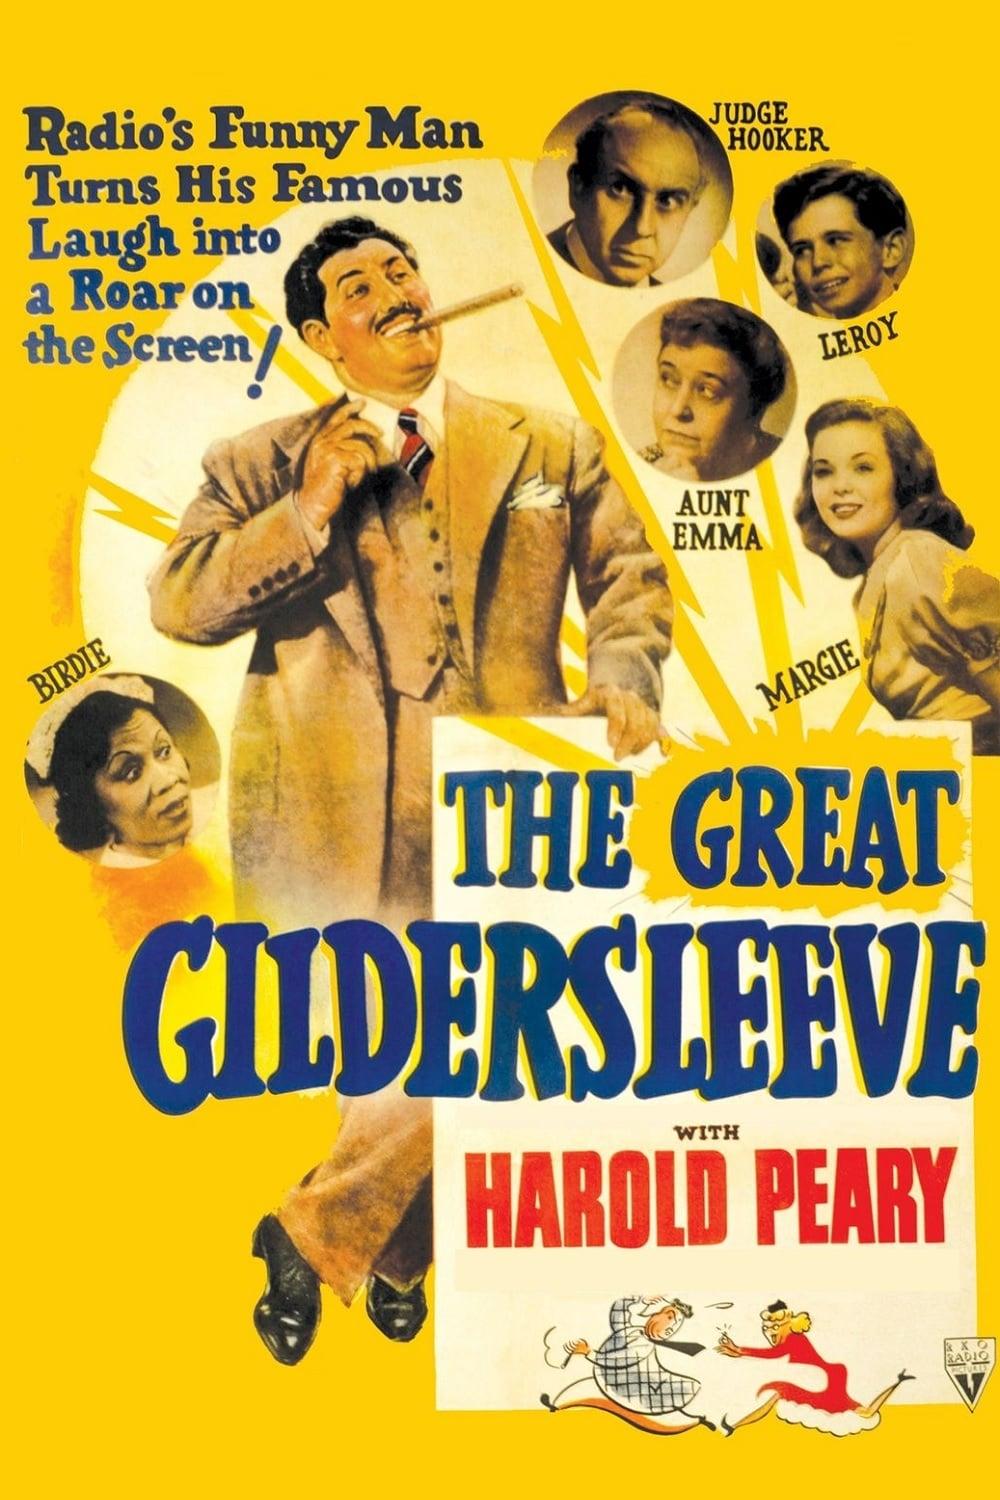 The Great Gildersleeve poster